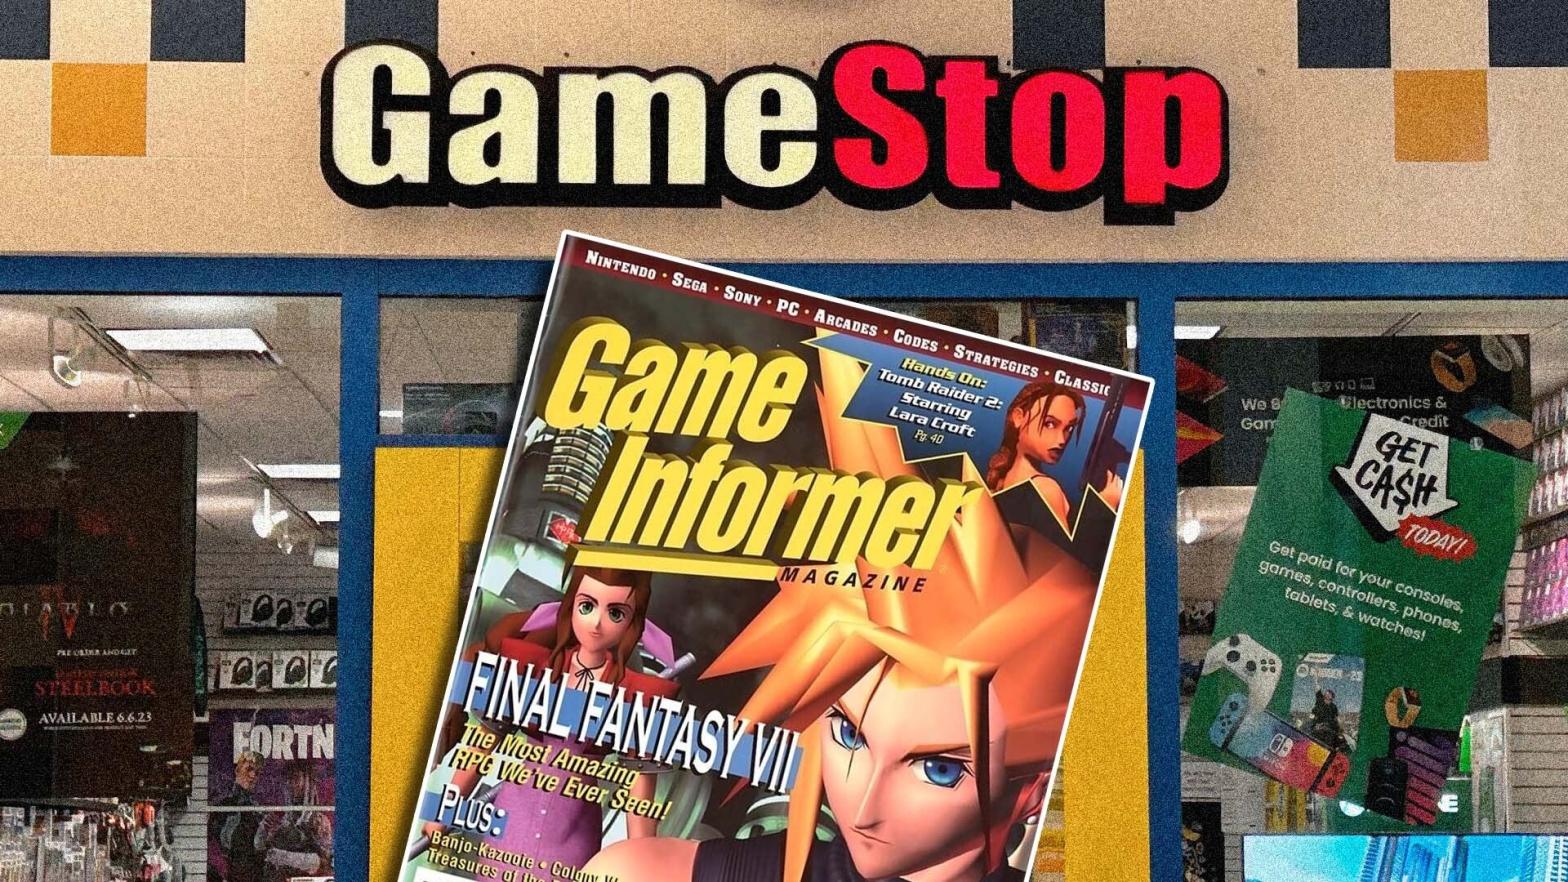 GameStop Shuts Down Game Informer, The Longest Running Gaming Magazine In The US